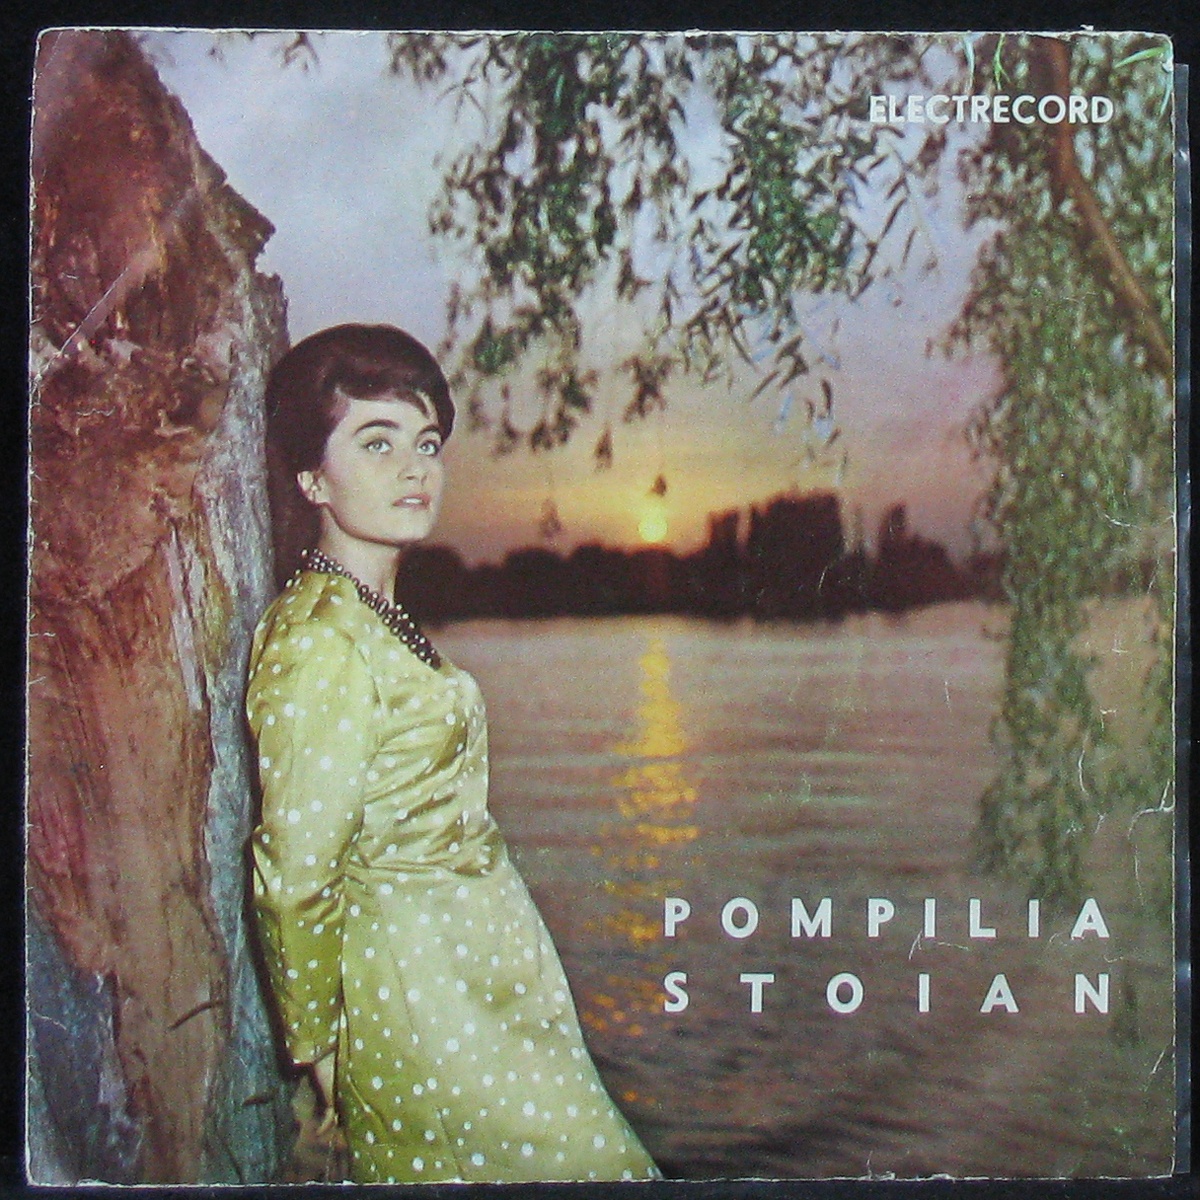 LP Pompilia Stoian — Pompilia Stoian (single, mono) фото